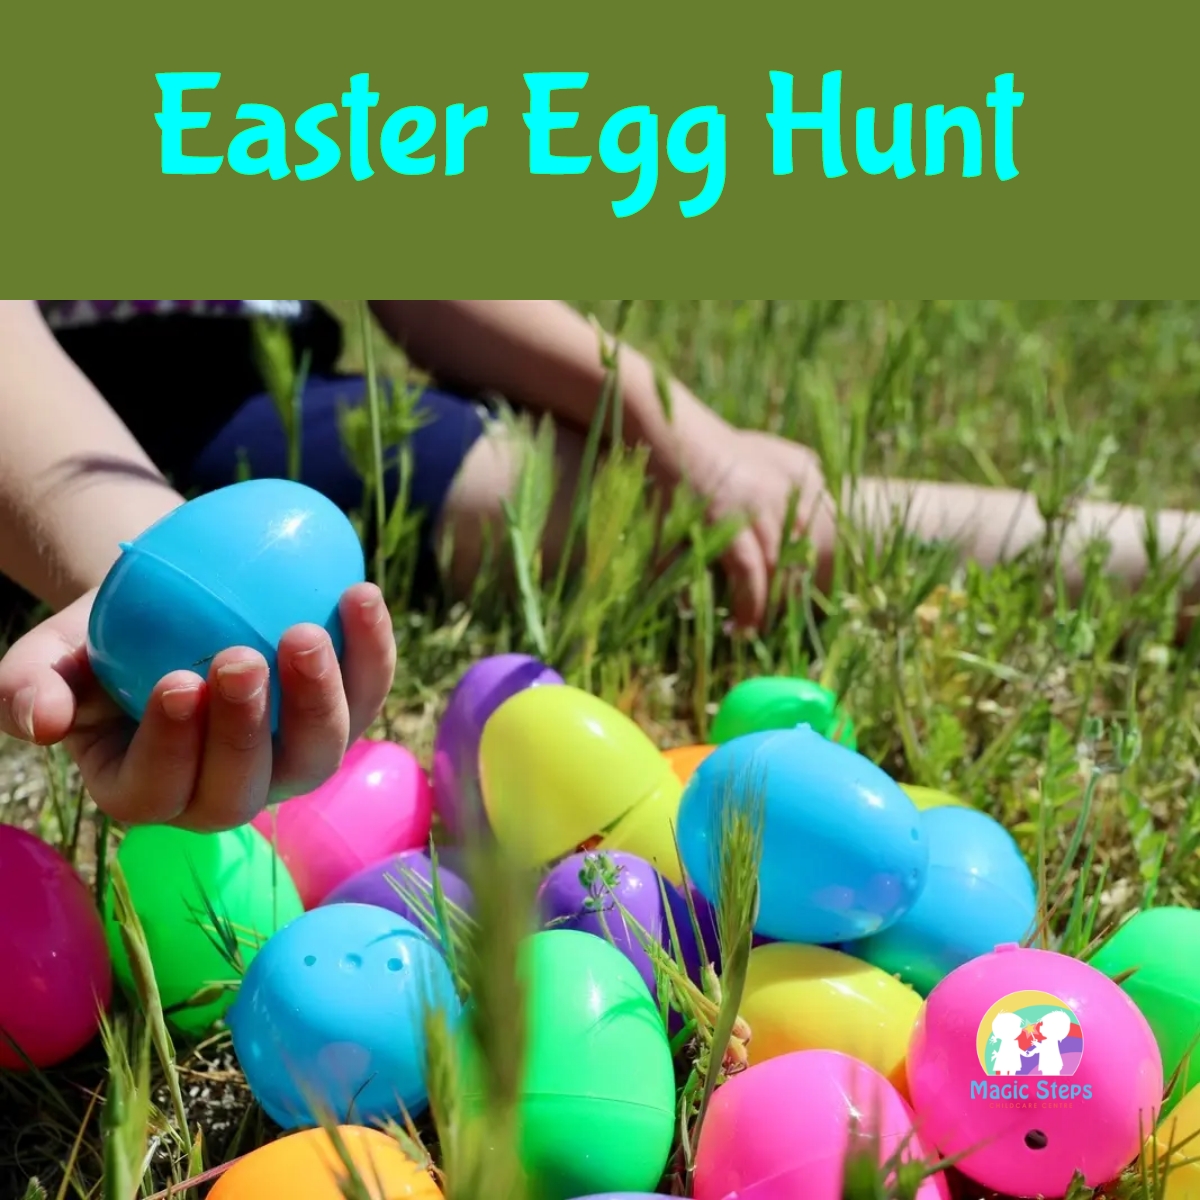 Easter Egg Hunt- Wednesday 5th April